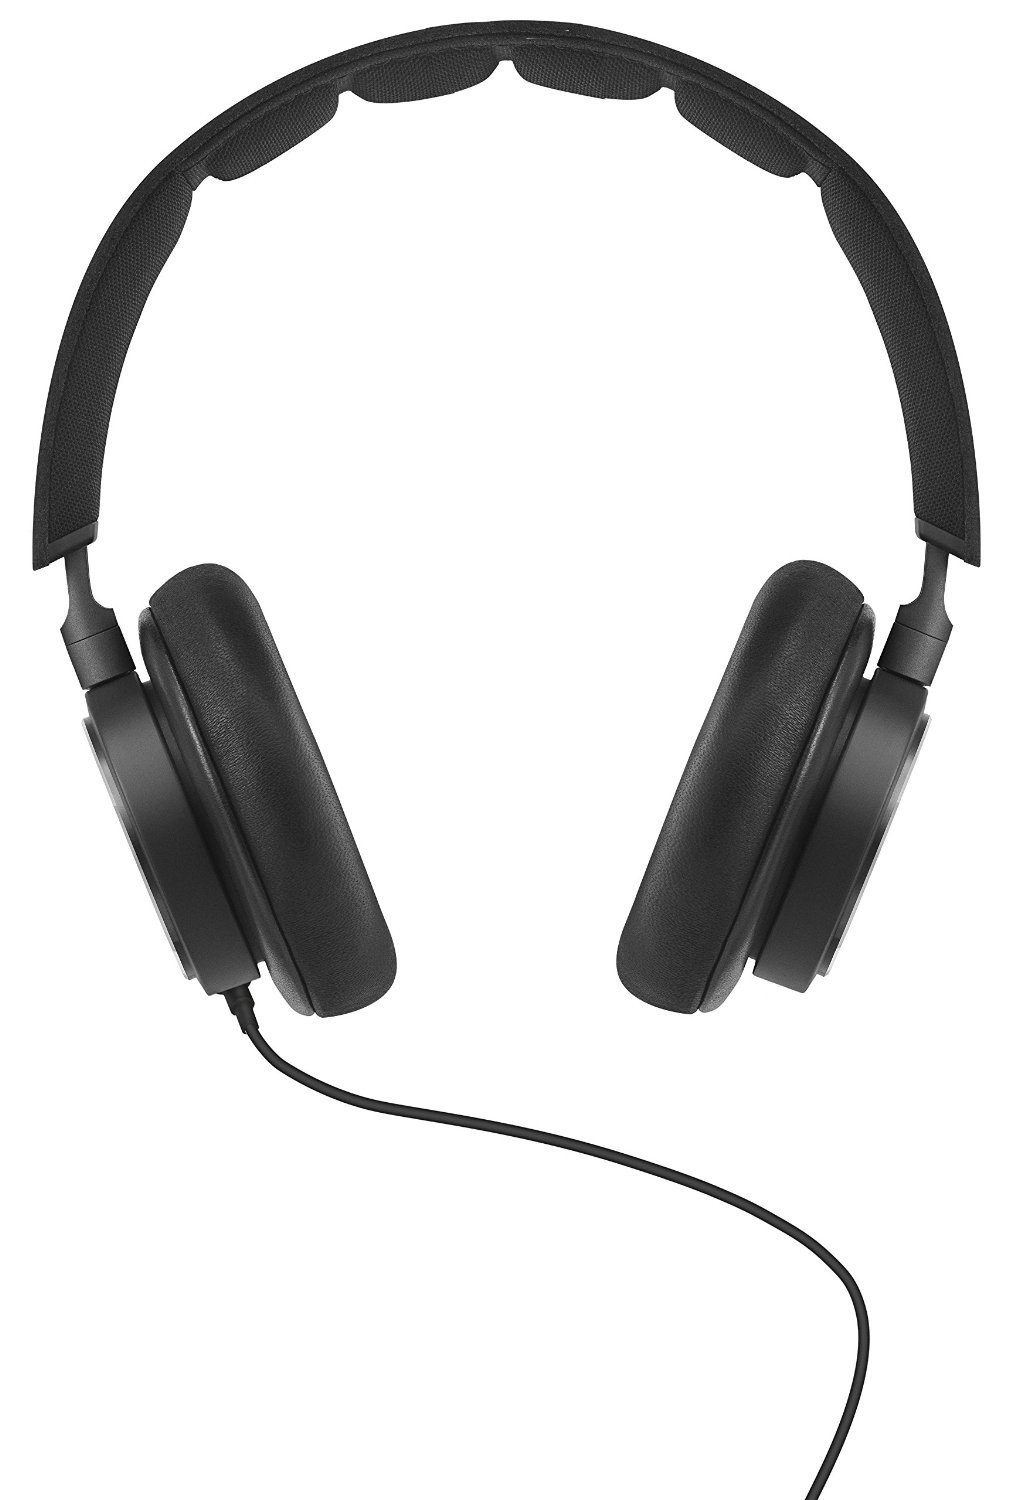 Best headphones for HTC Vive | VRHeads